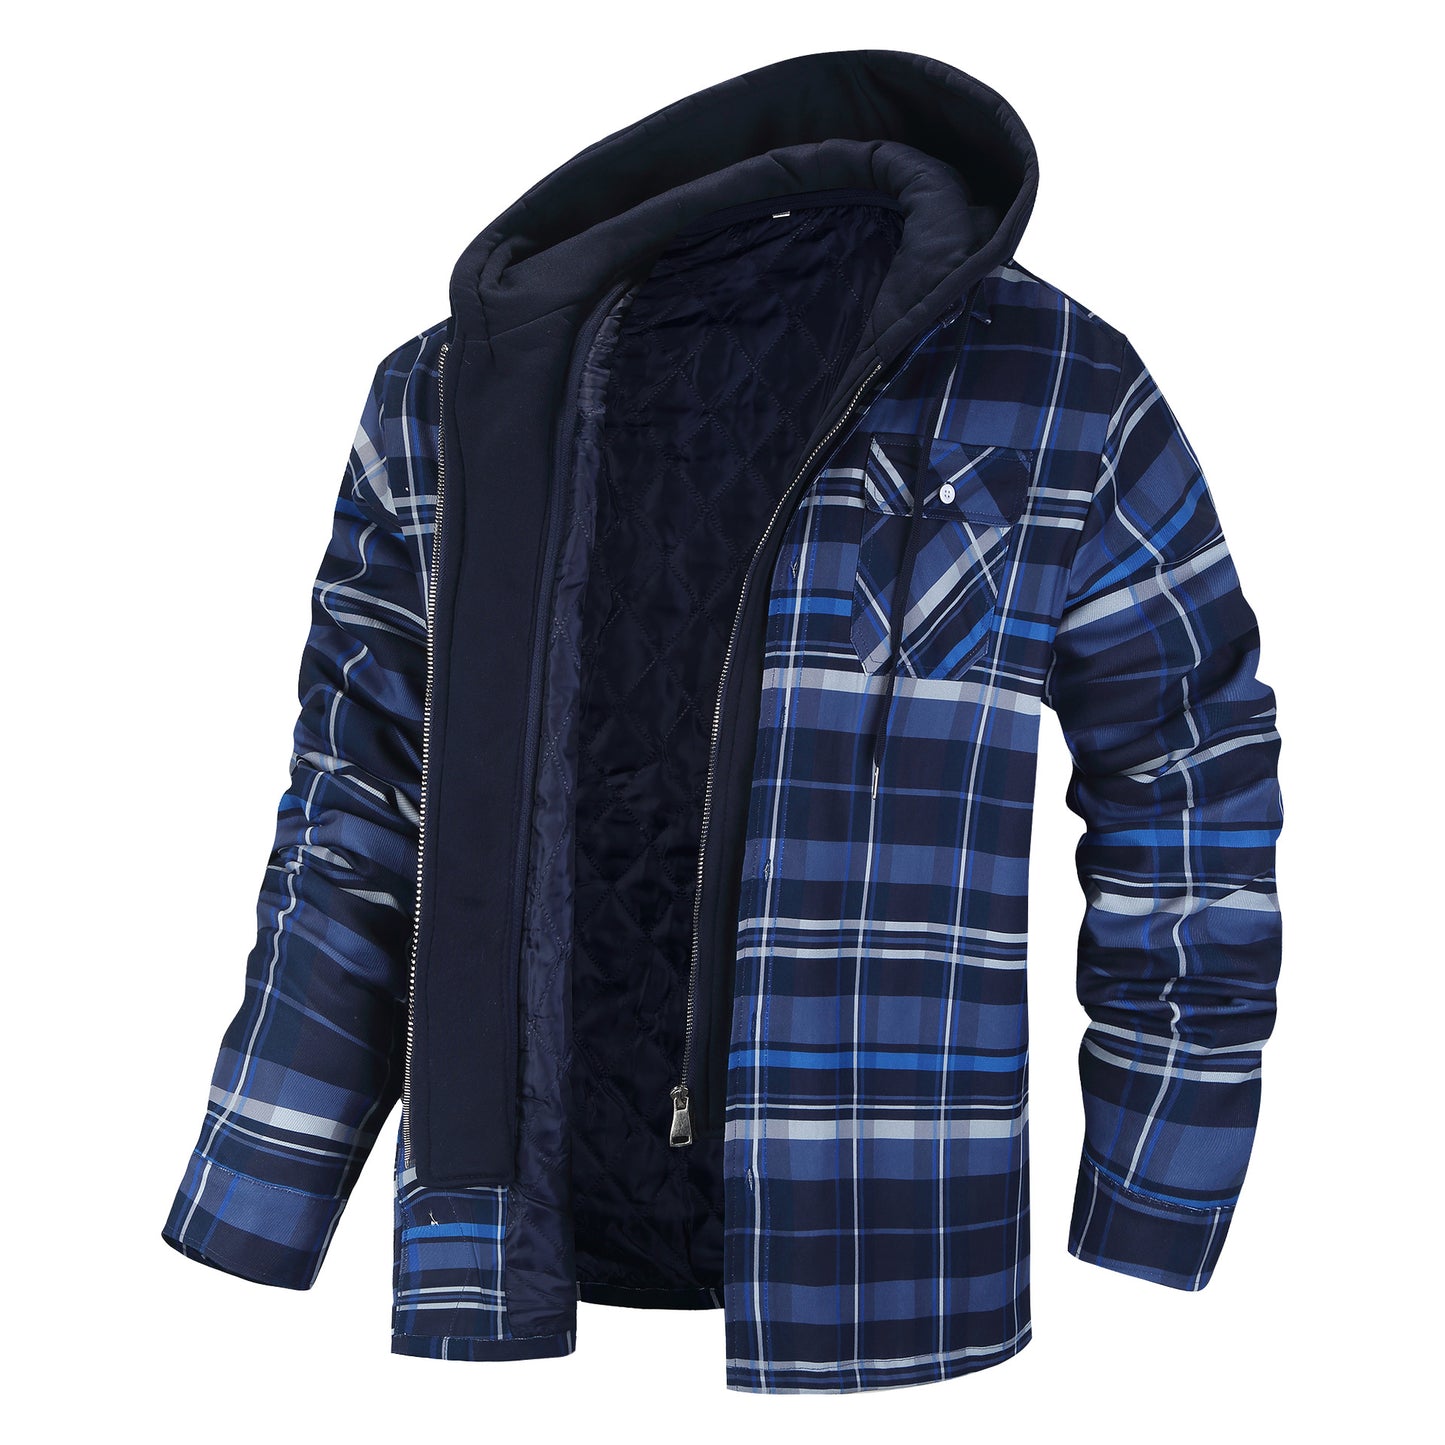 Casual Winter Thick Warm Long Sleeves Jacket Coats